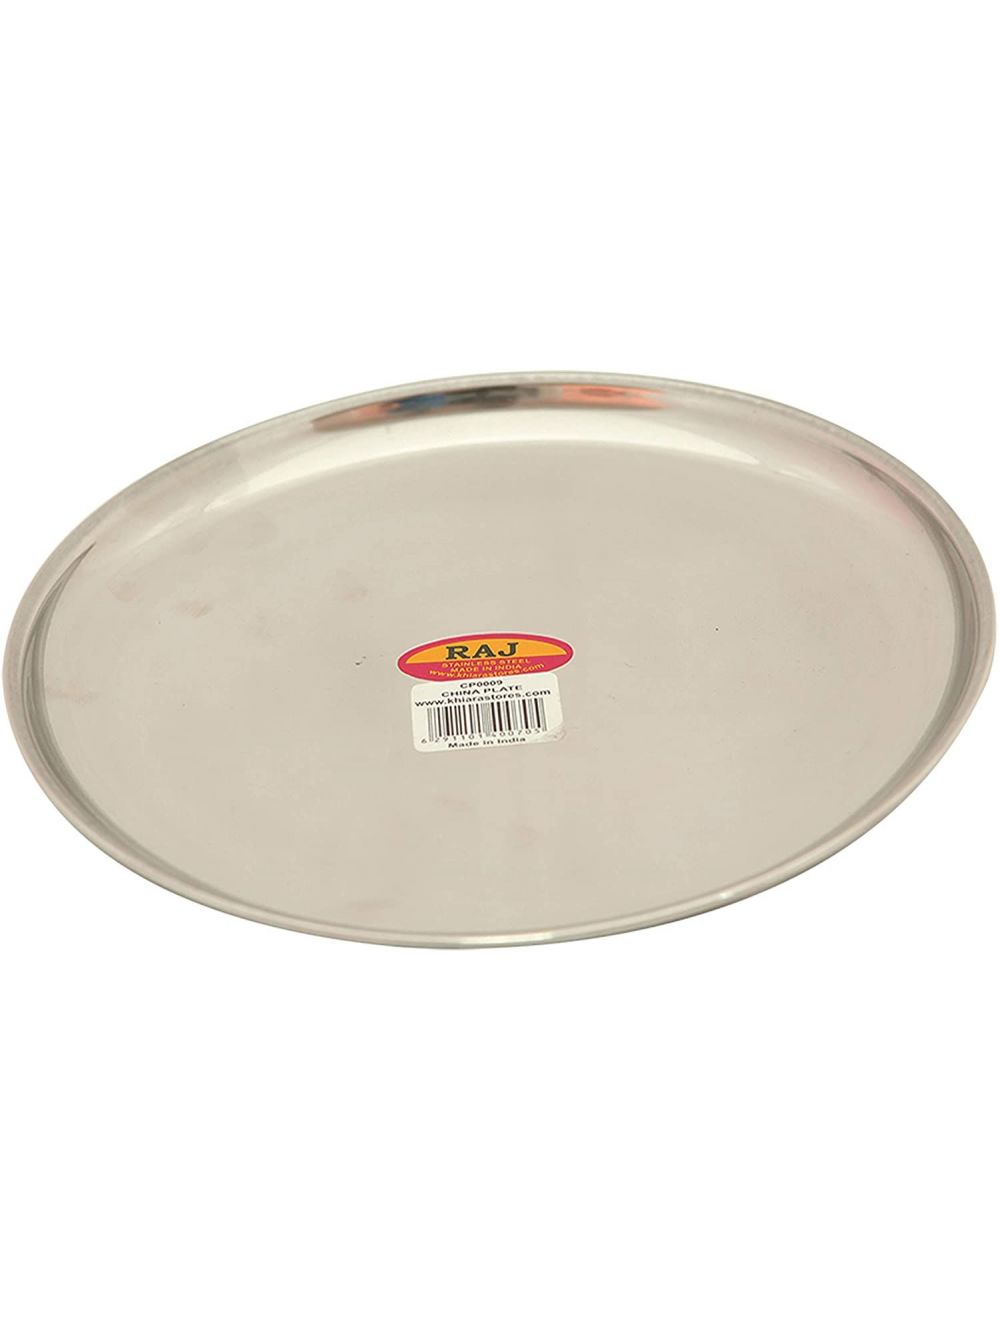 Raj Steel Plate, Silver, 26 cm, CP0011